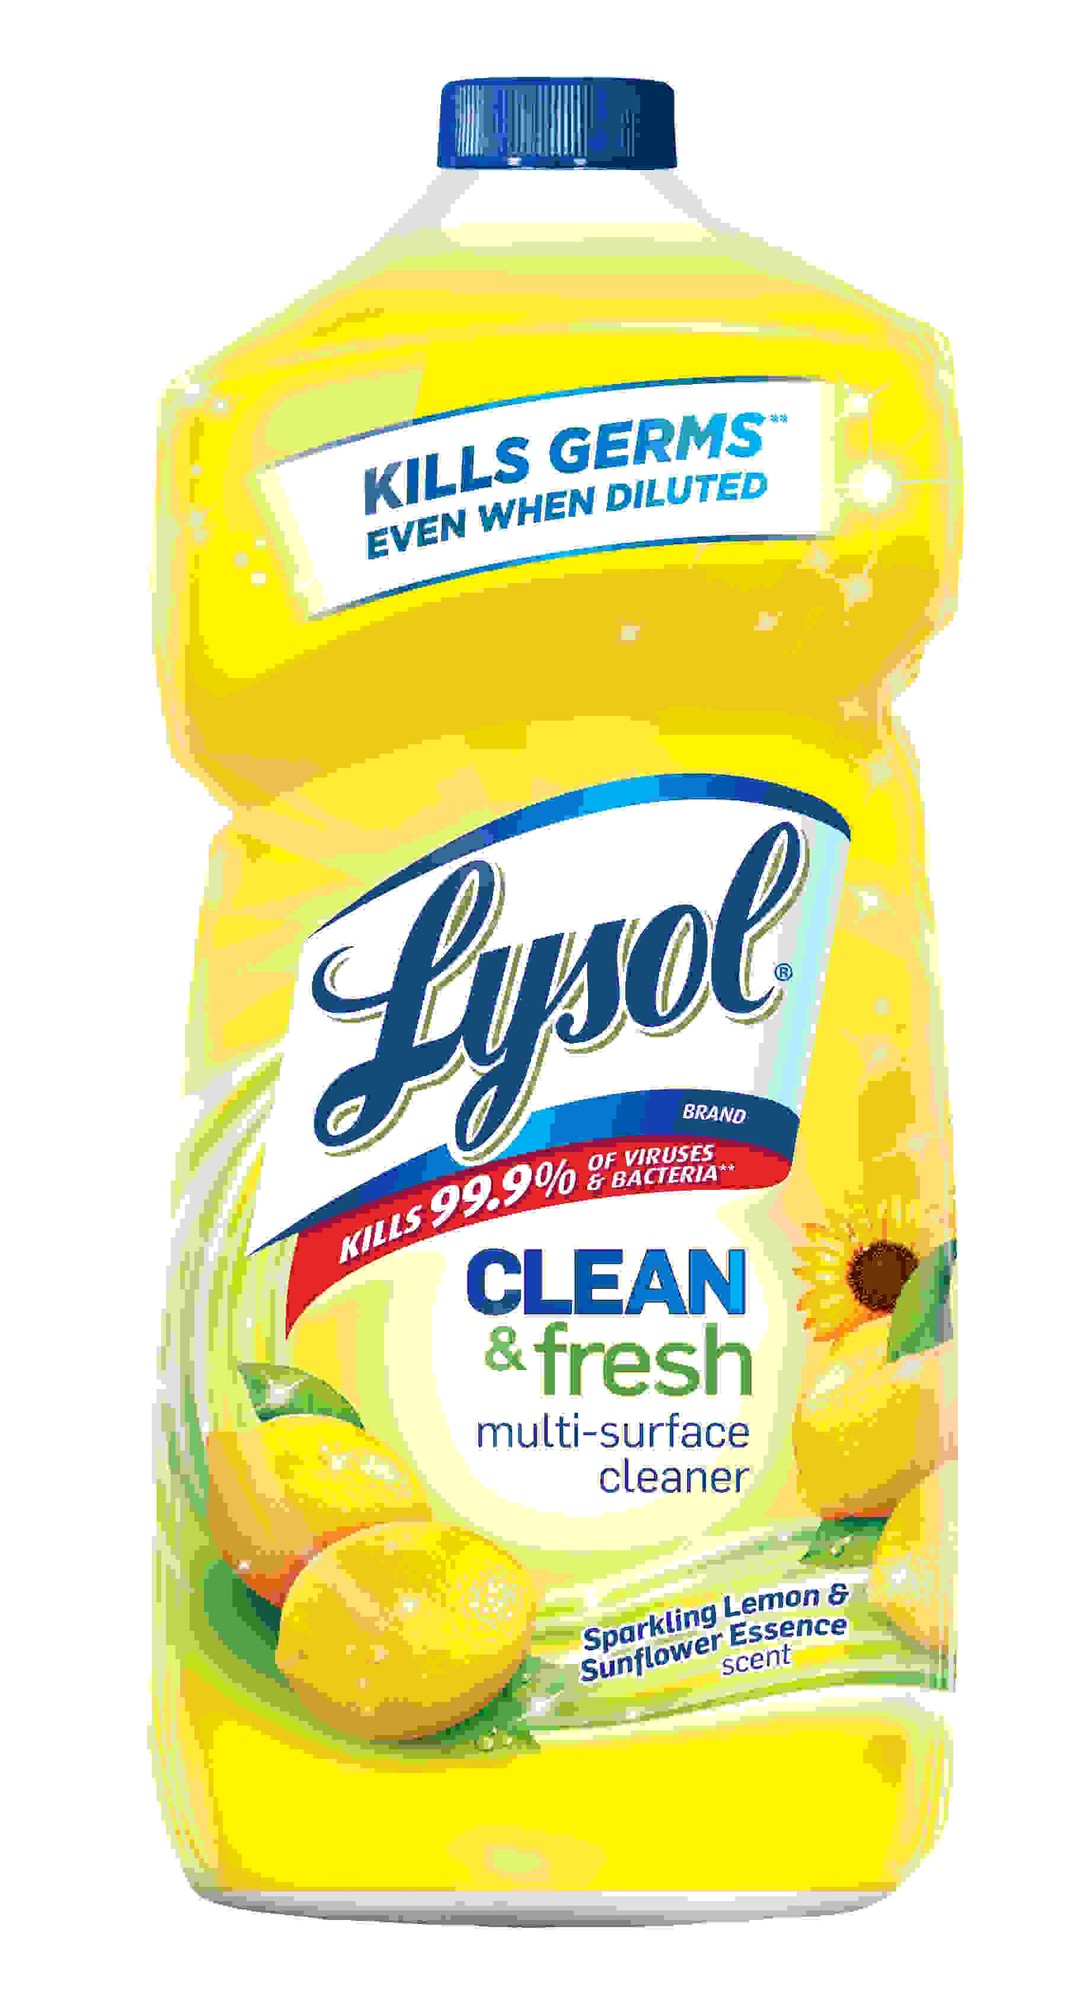 All-Purpose Cleaner, Sparkling Lemon & Sunflower Essence Scent, 40oz Bottle